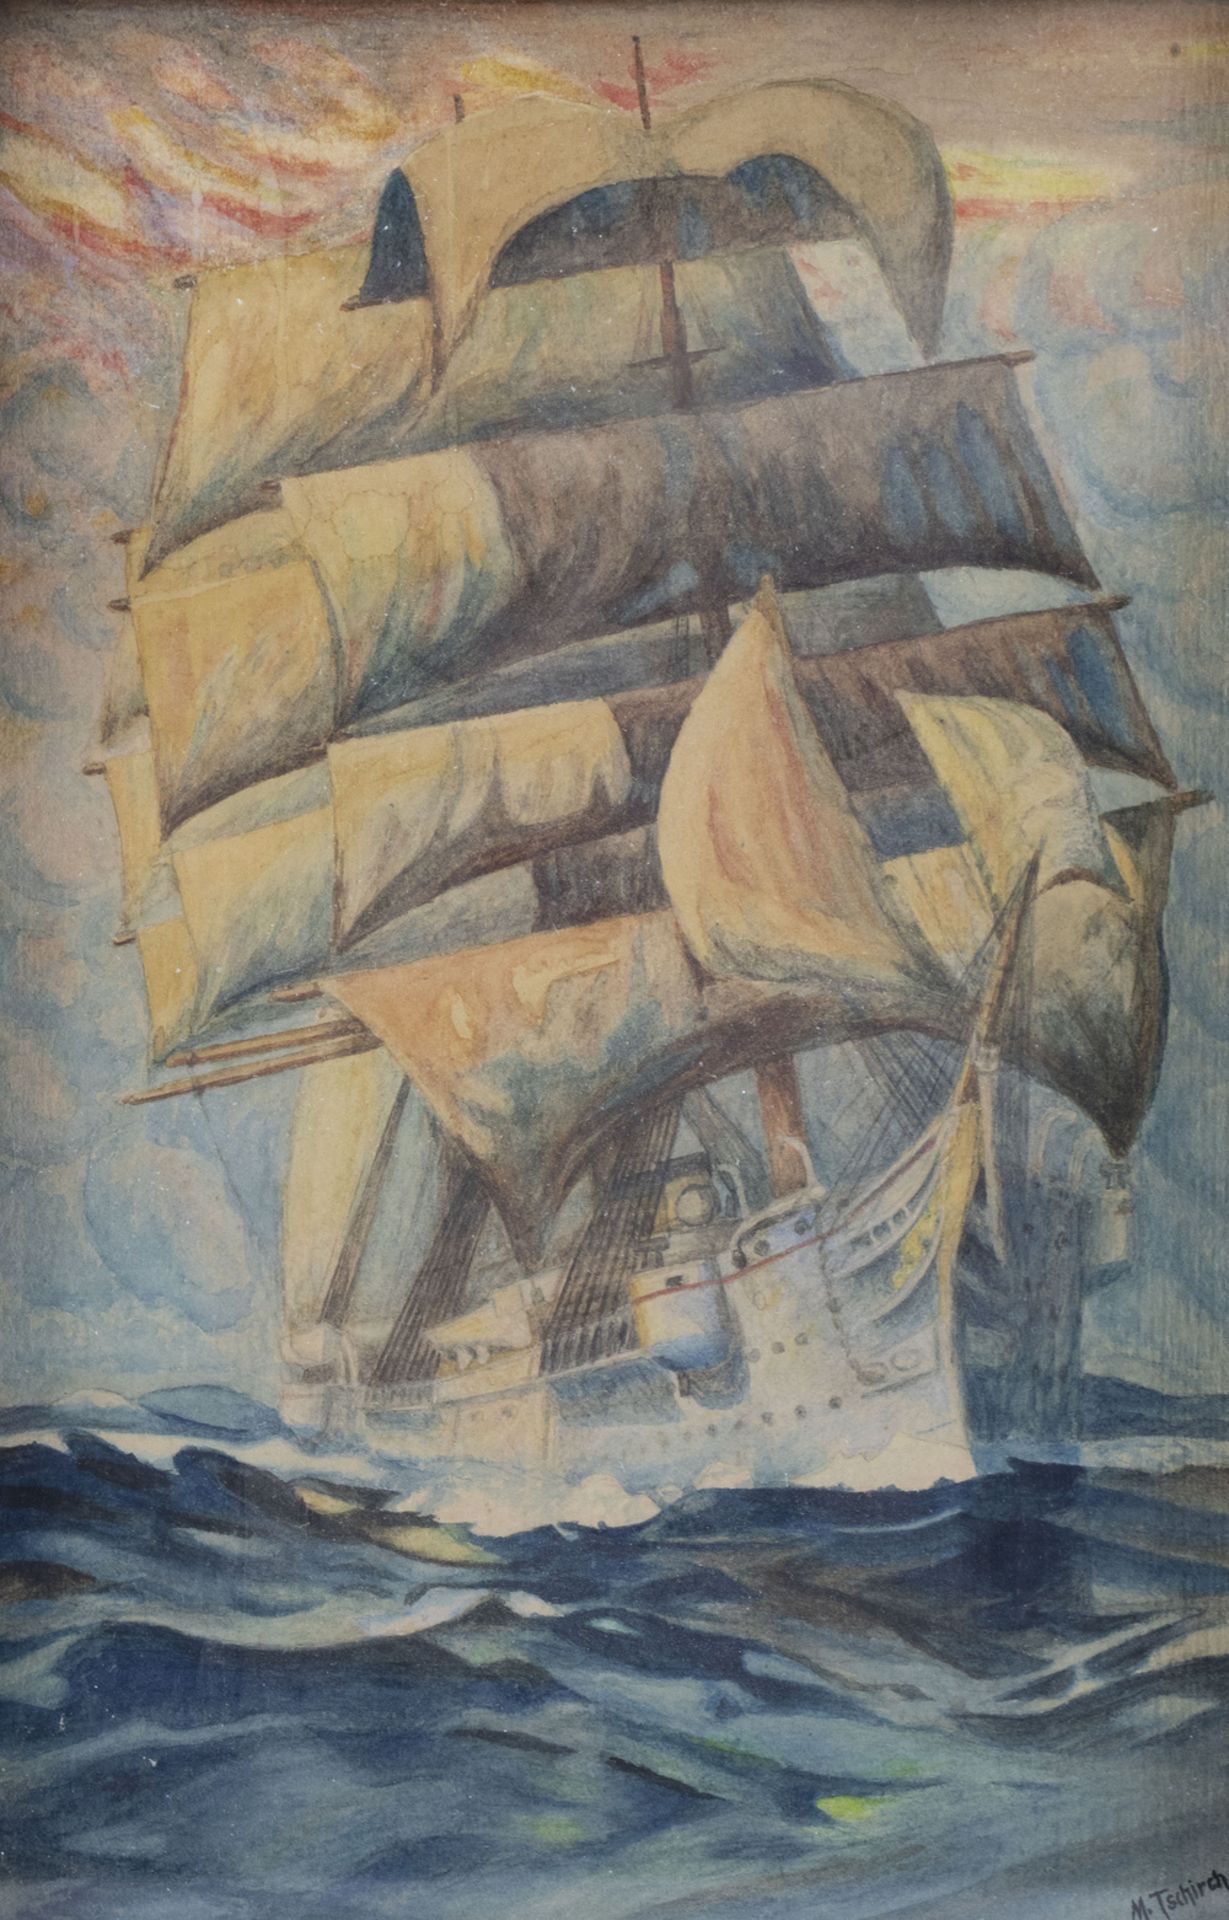 Darstellung eines Schiffes / A depiction of a ship, 1. Hälfte 20. Jh.